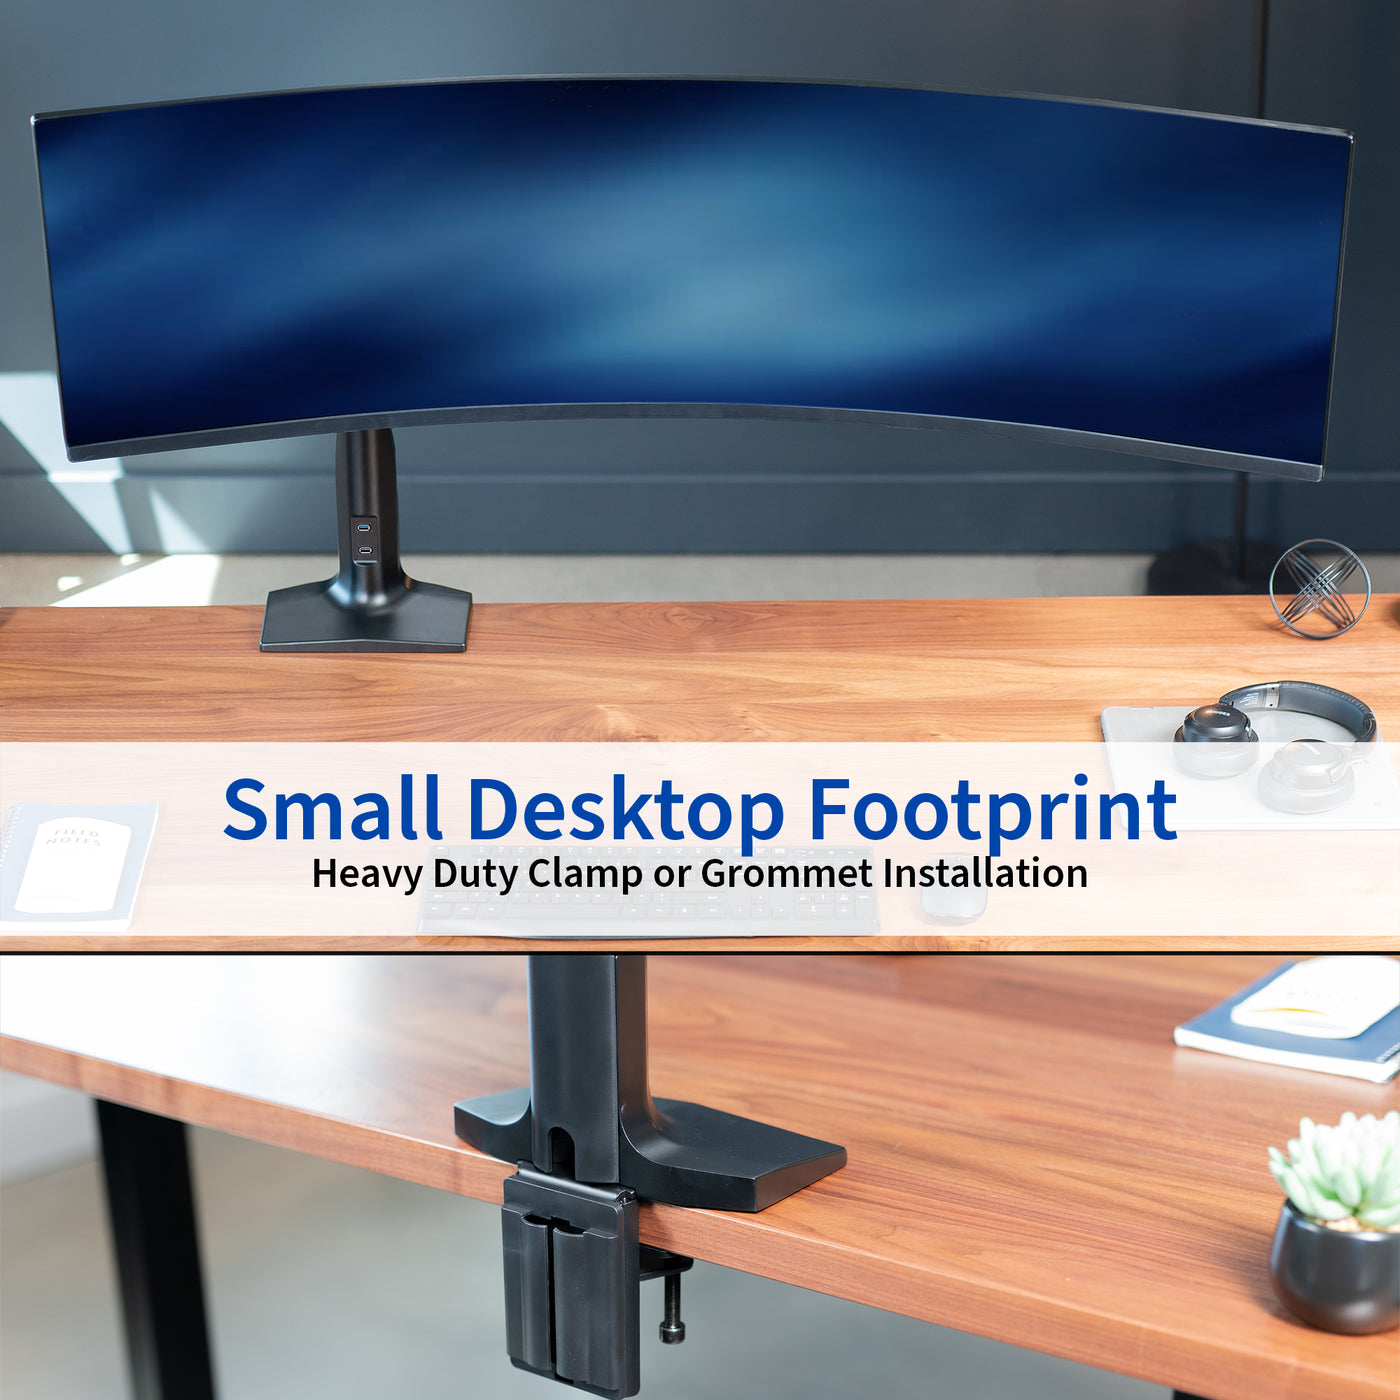 Sturdy adjustable pneumatic arm single ultrawide monitor ergonomic desk mount with USB ports for office workstation.